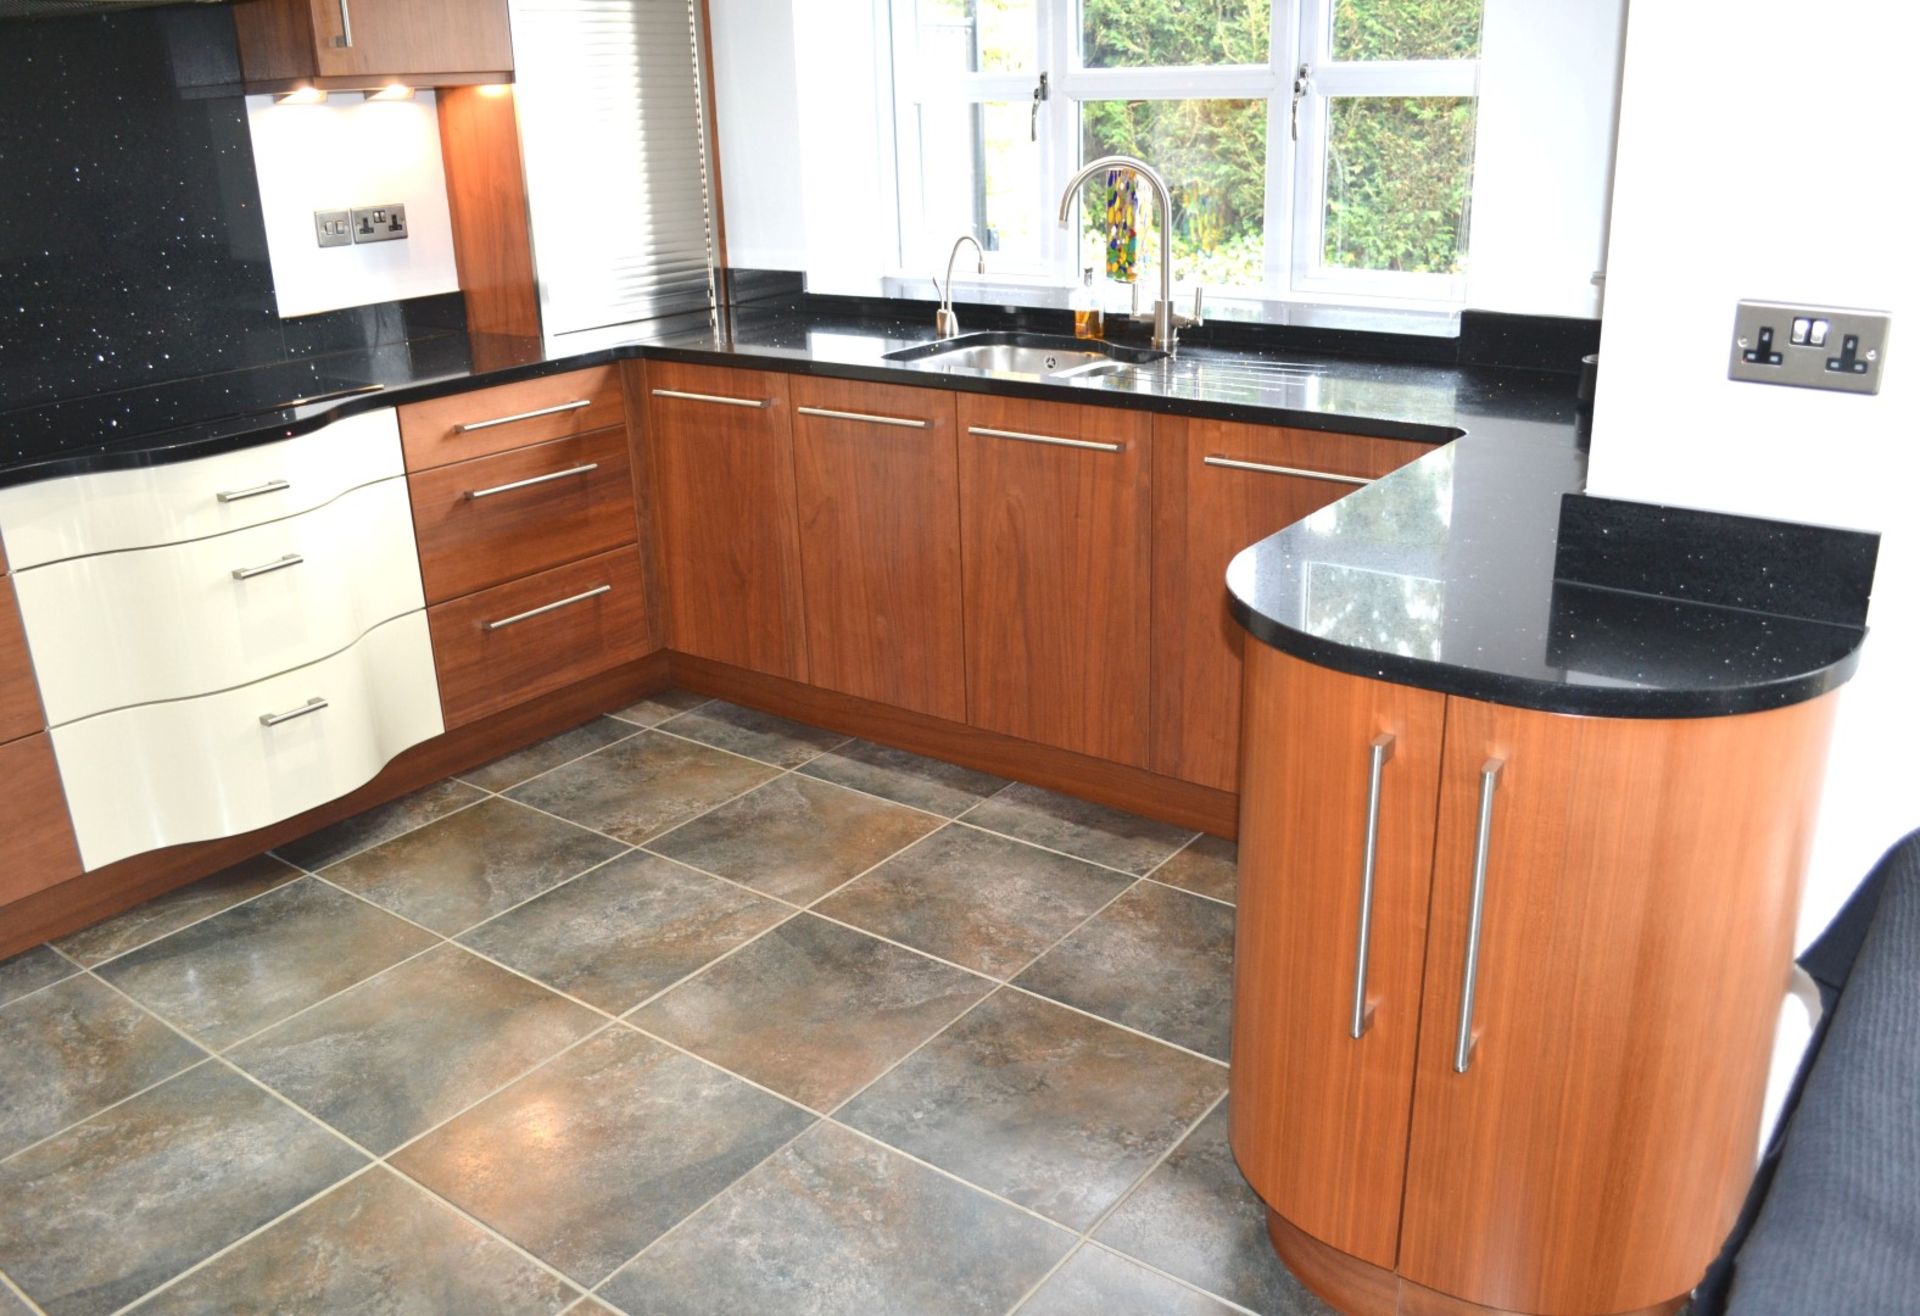 1 x Kitchen Design Bespoke Fitted Kitchen With Silestone Worktops & Neff Appliances - Superb - Image 8 of 59